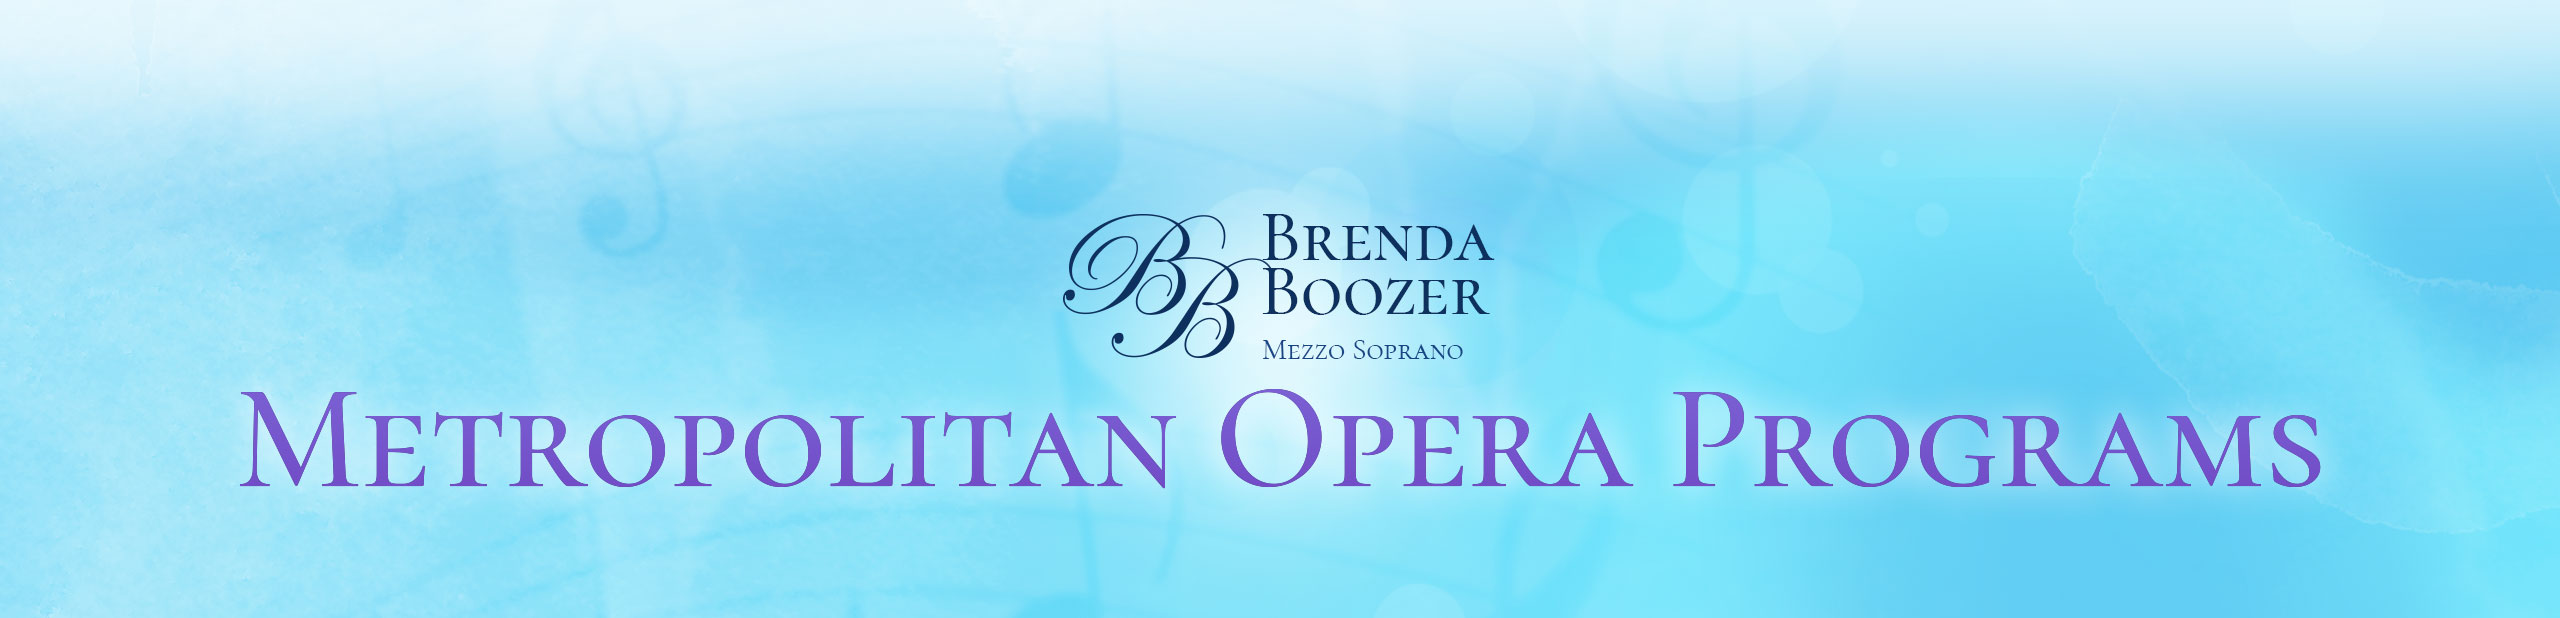 Brenda Boozer - Metropolitan Opera Programs Banner